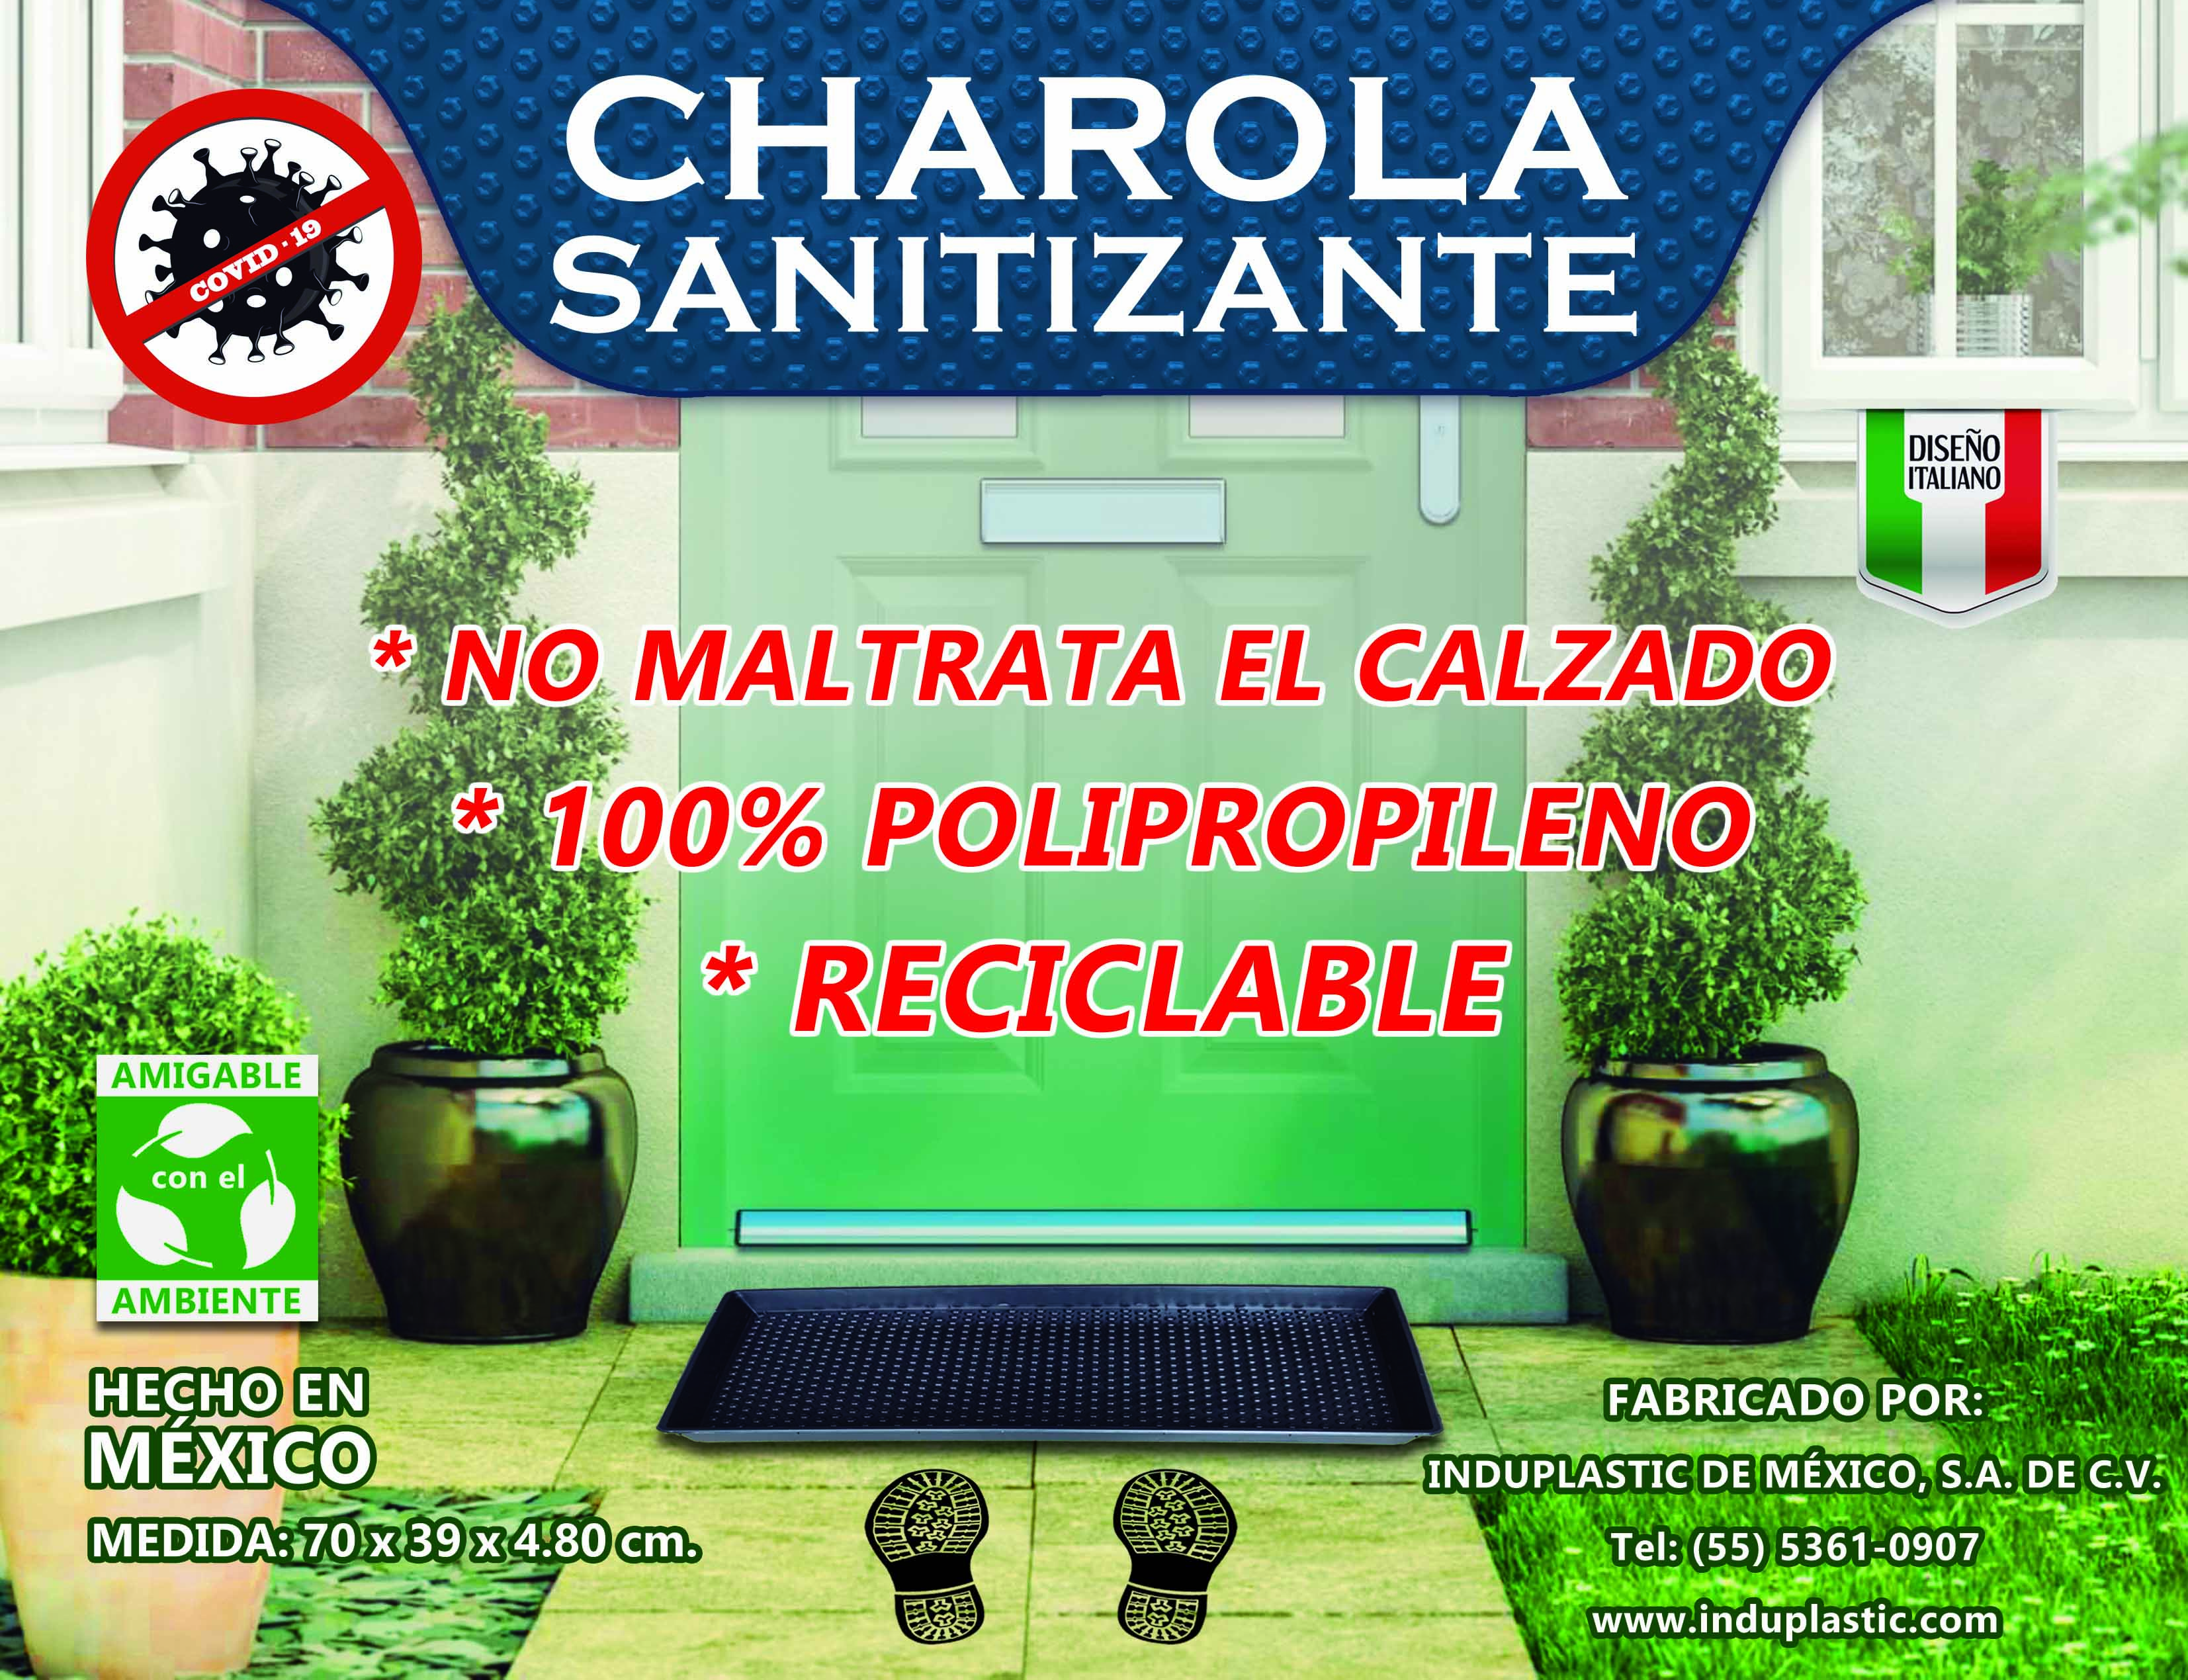 Charolas Sanitizantes COVID-19 en Induplastic de México S.A. de C.V.